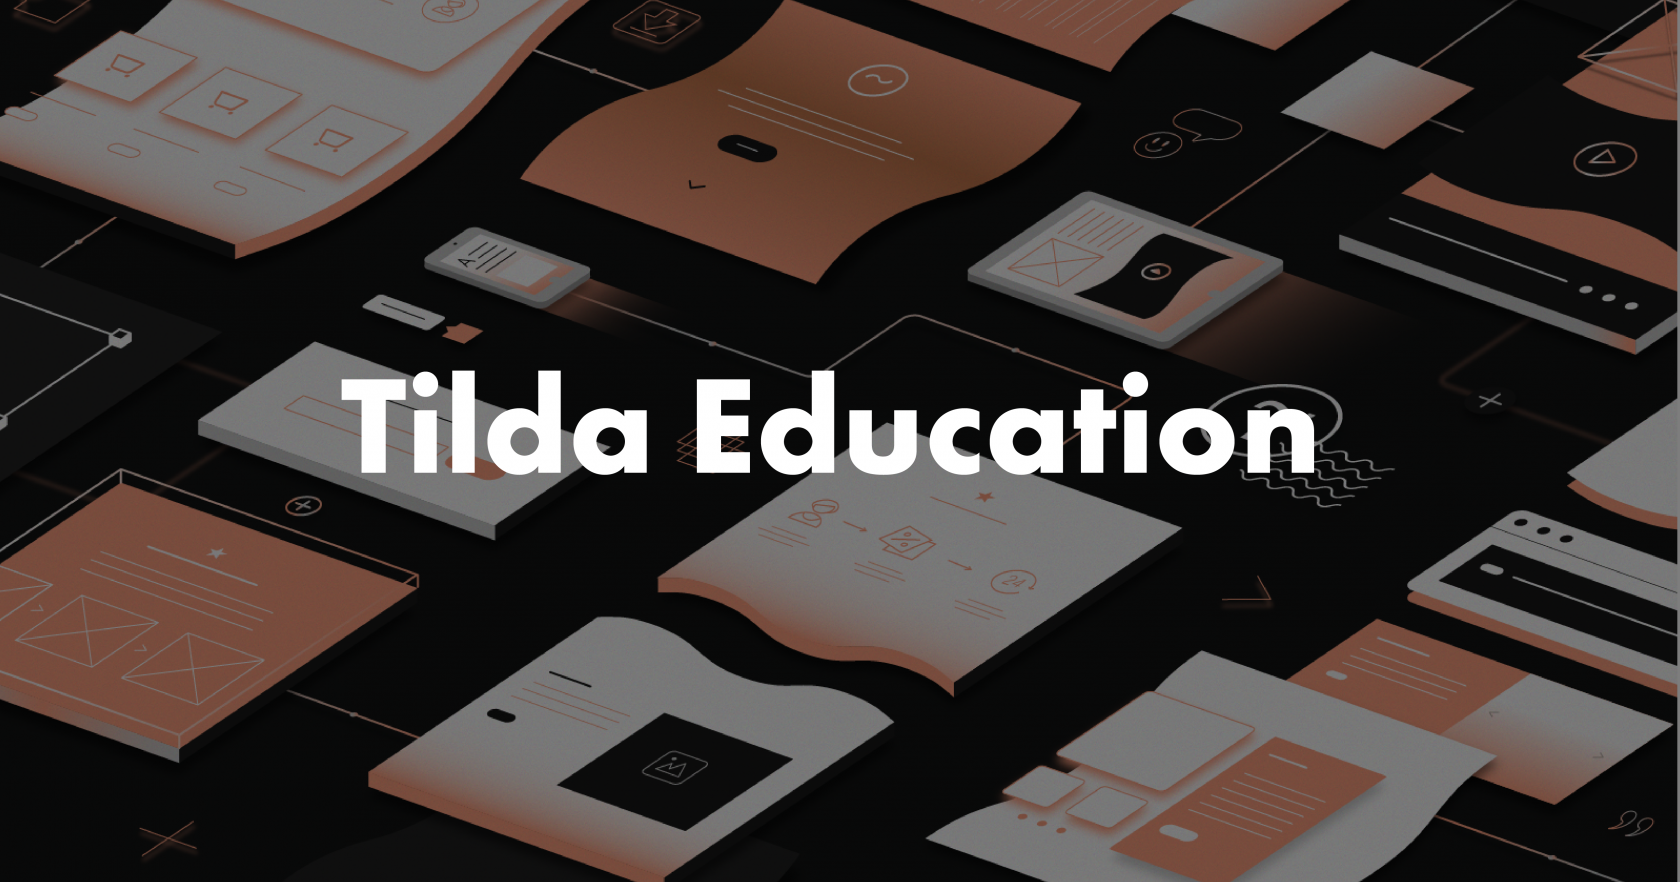 (c) Tilda.education